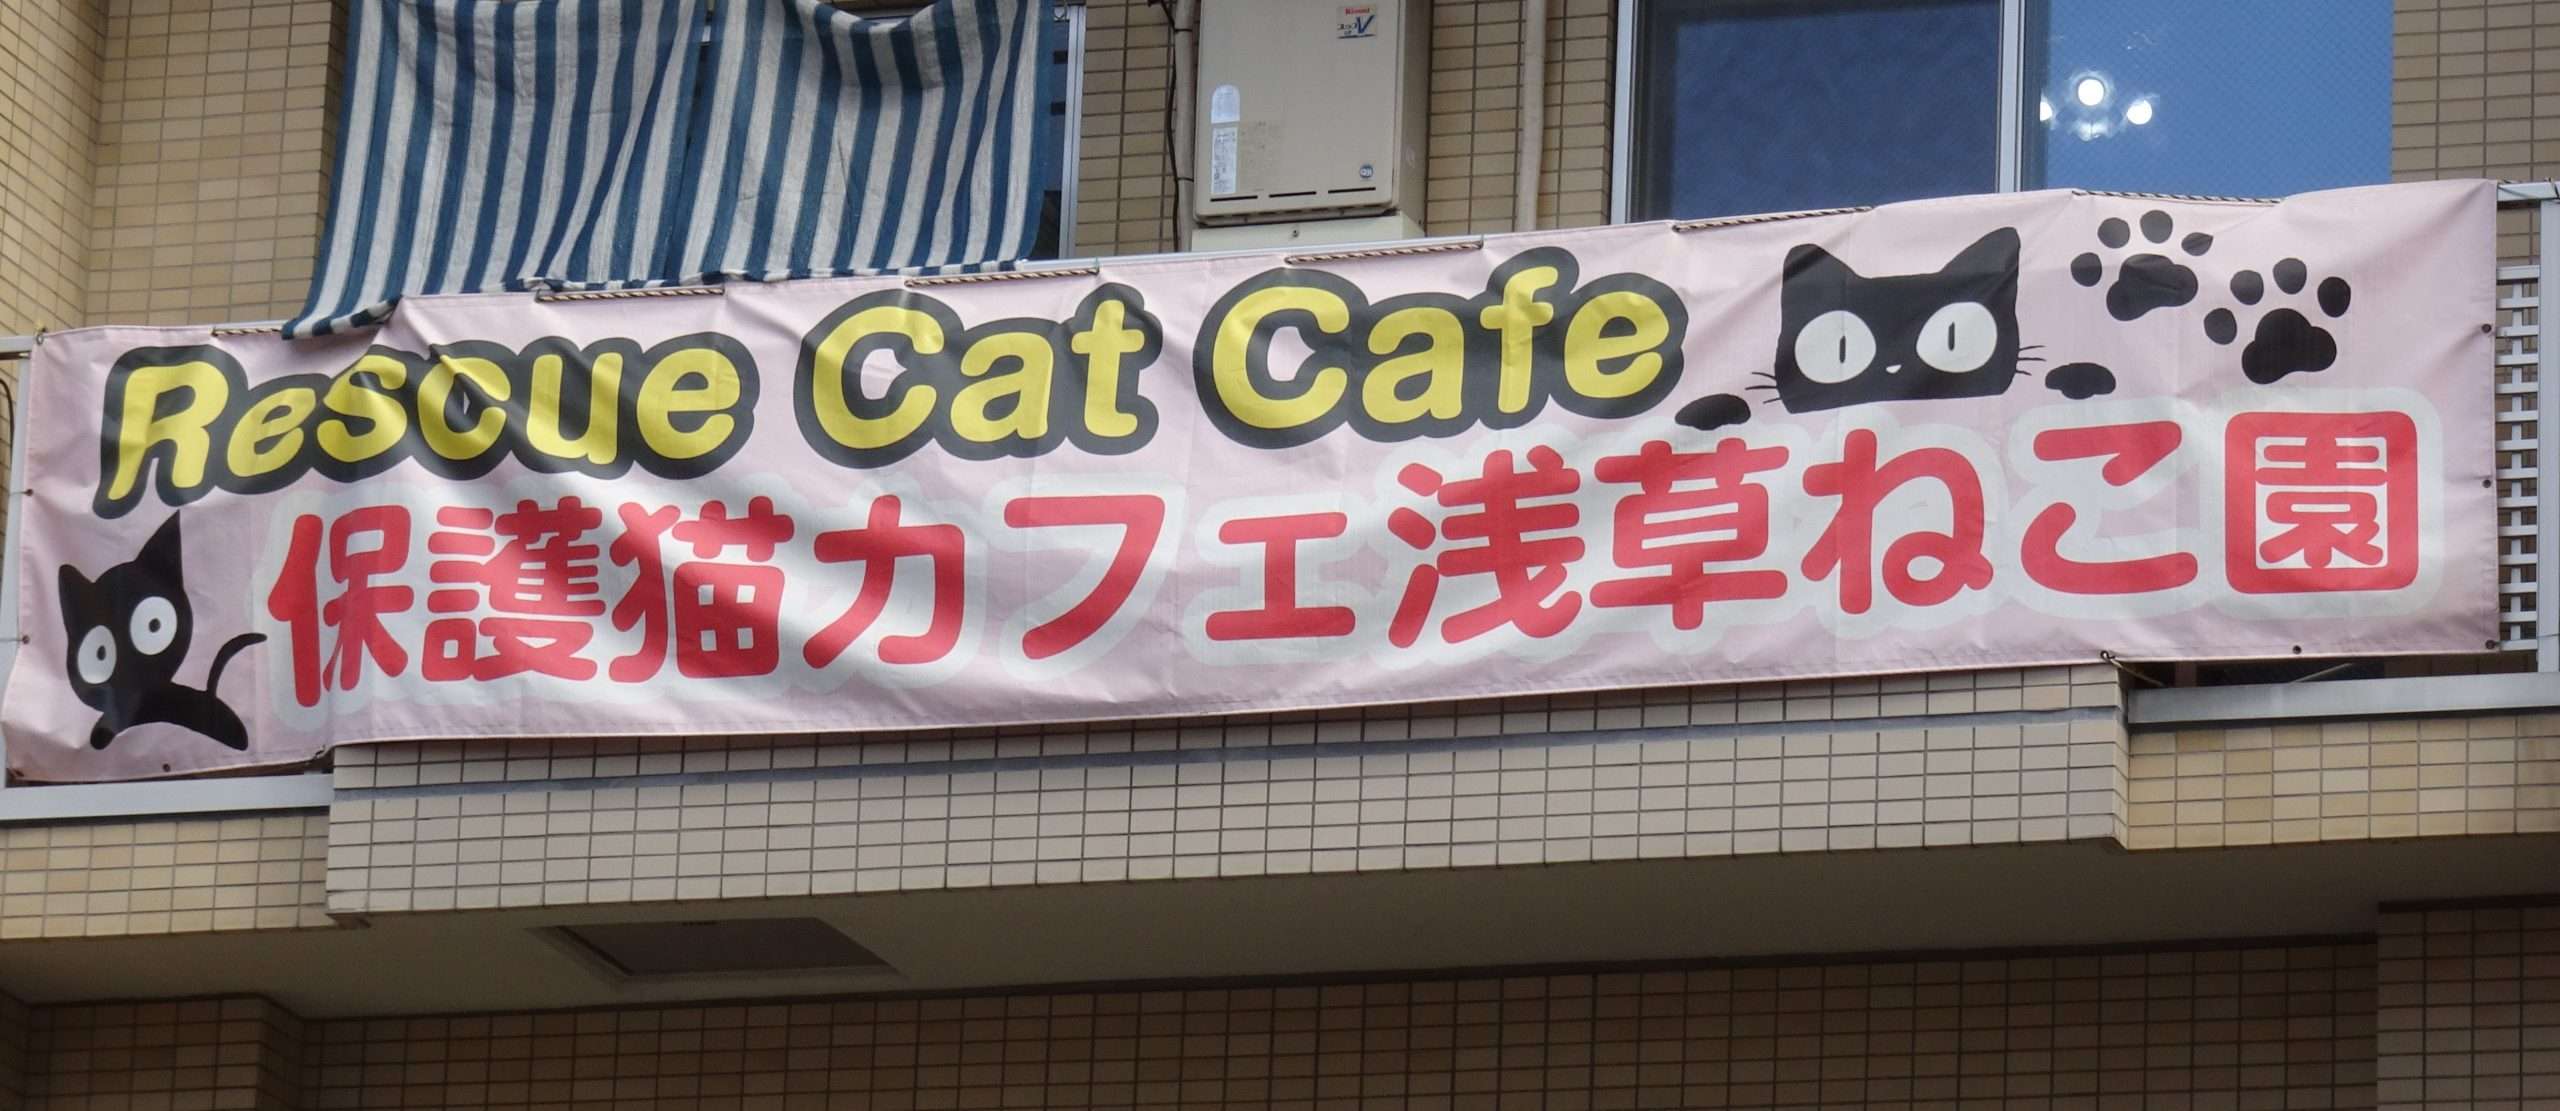 Cat café in Asakusa